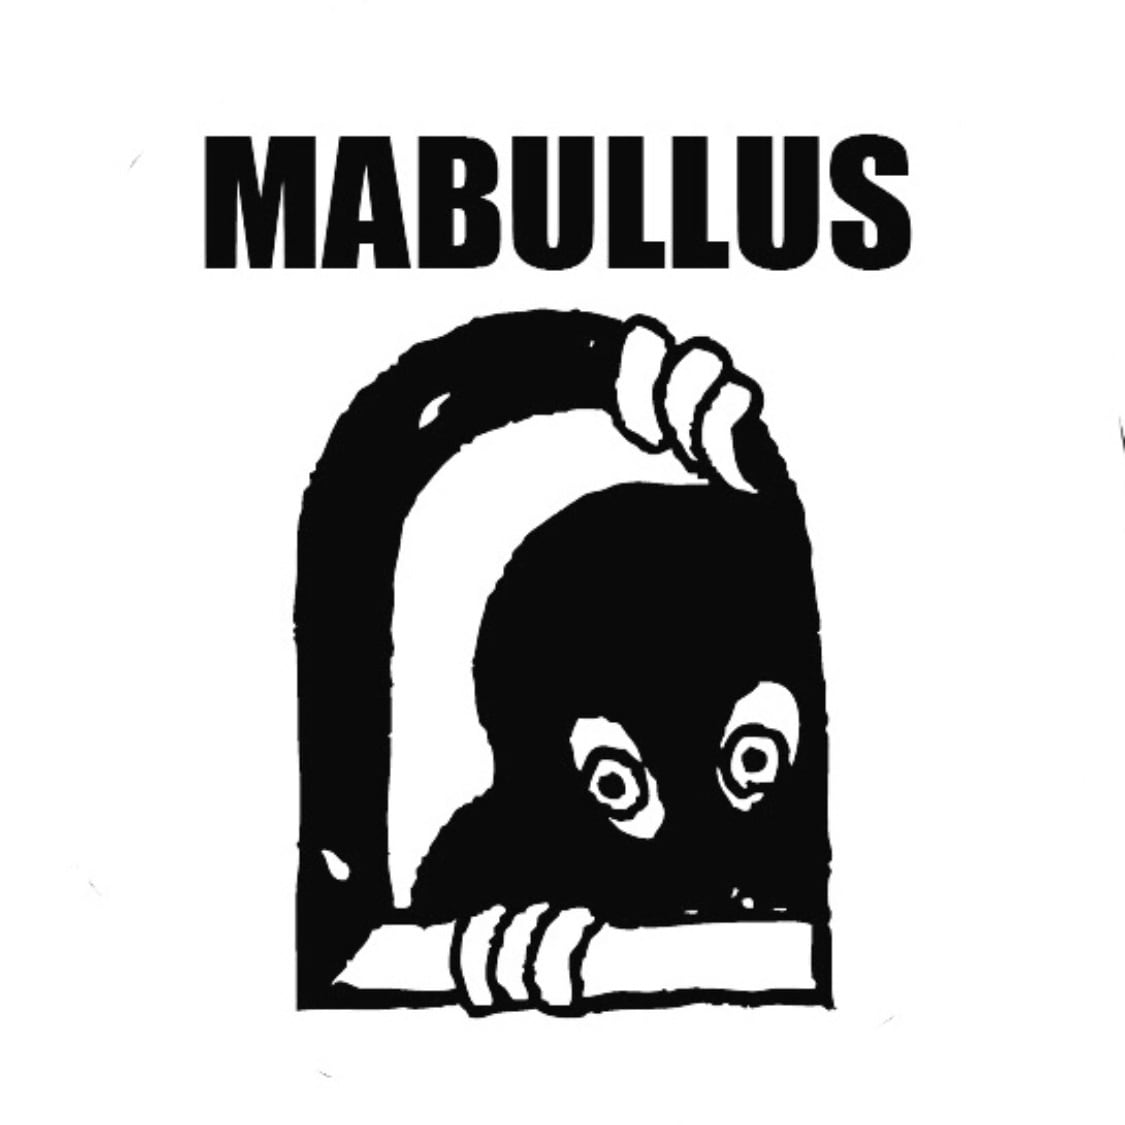 STORE MABULLUS